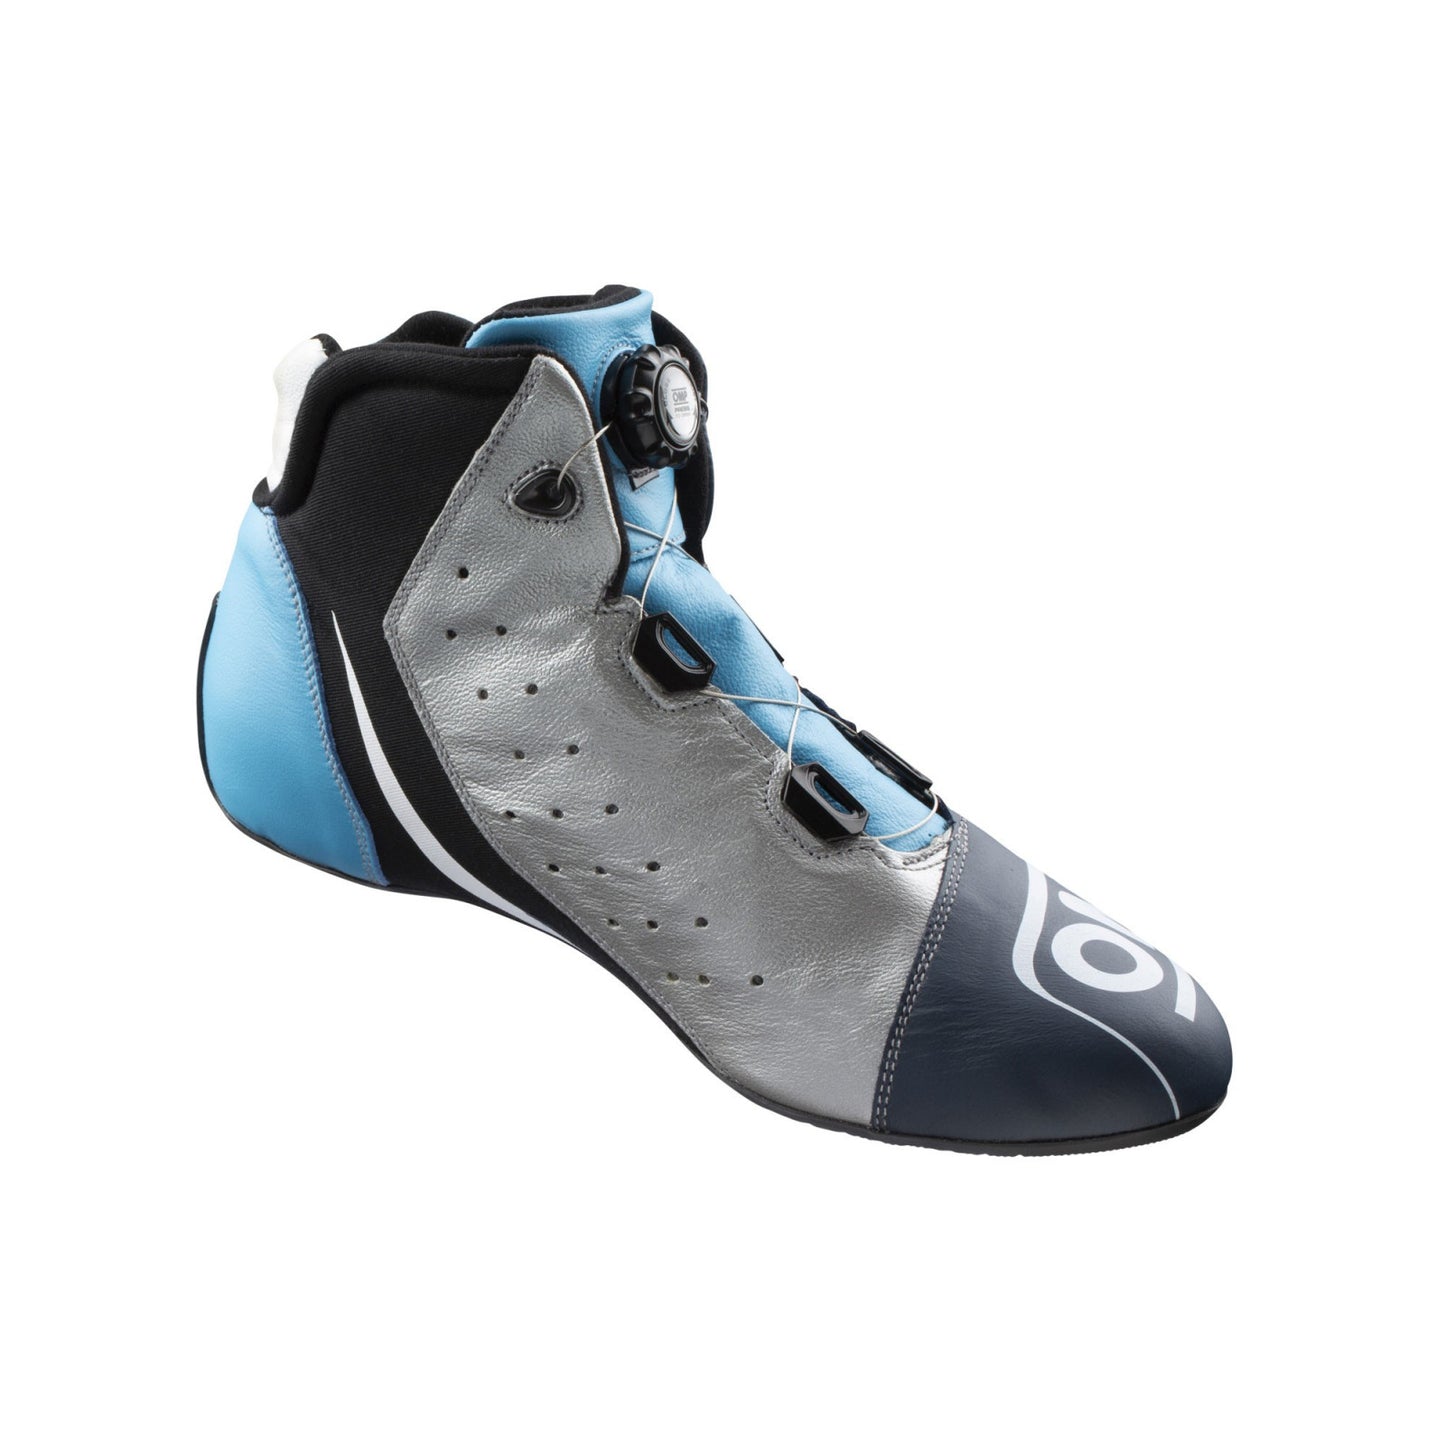 OMP Evo X R Shoes Blue/Cyan Size 43 IC805E24643